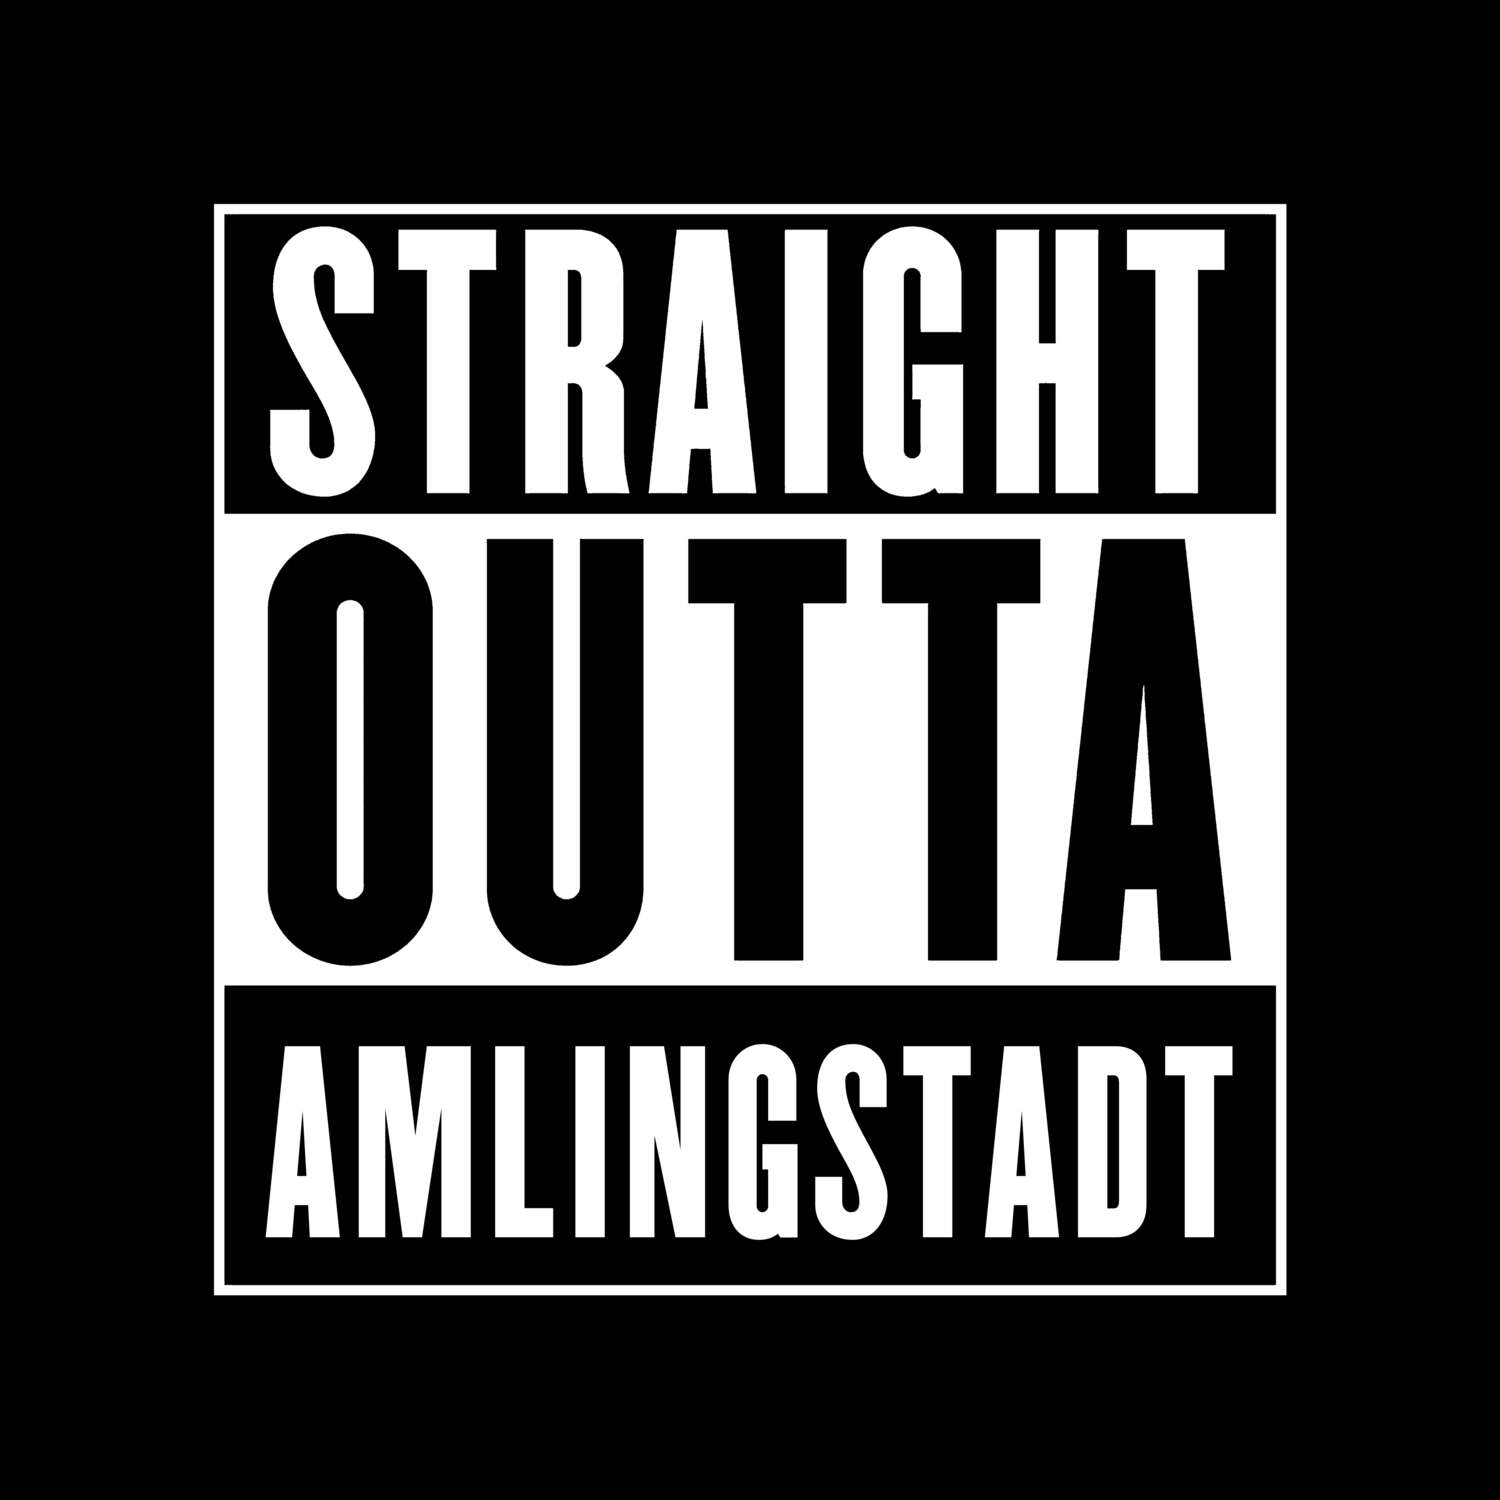 Amlingstadt T-Shirt »Straight Outta«